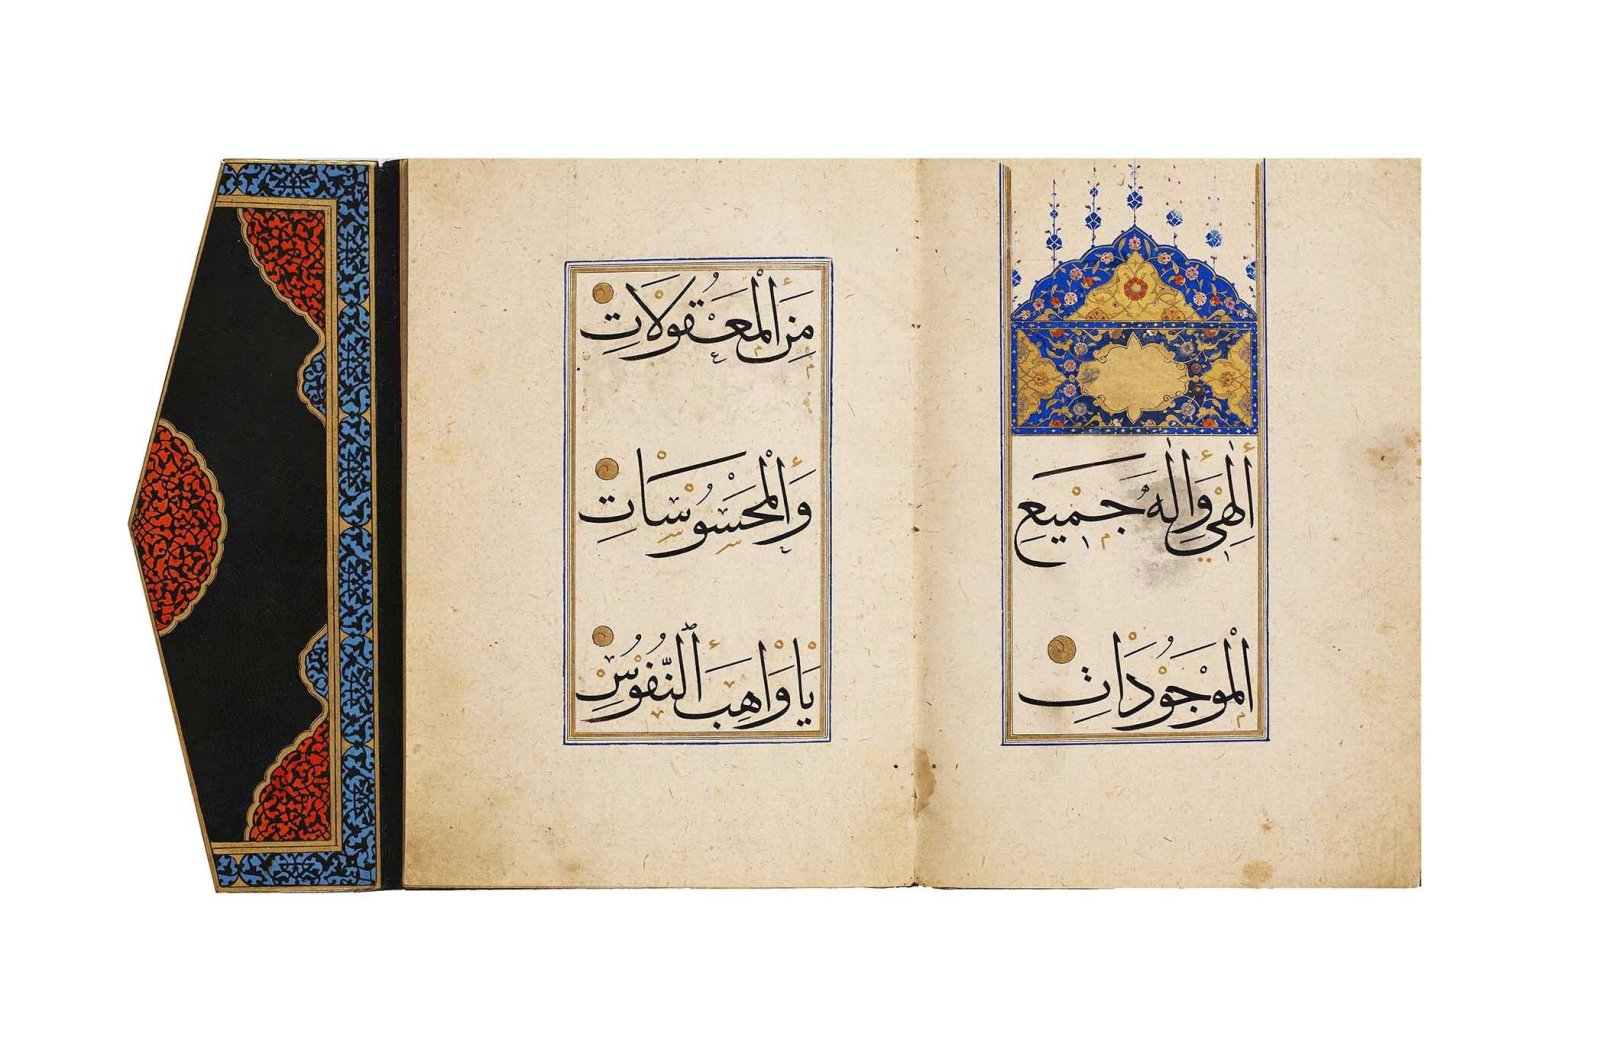 An anthology of prayers featuring muhaqqaq and reqa scripts by Sheikh Hamdullah. (Courtesy of Sakıp Sabancı Museum)